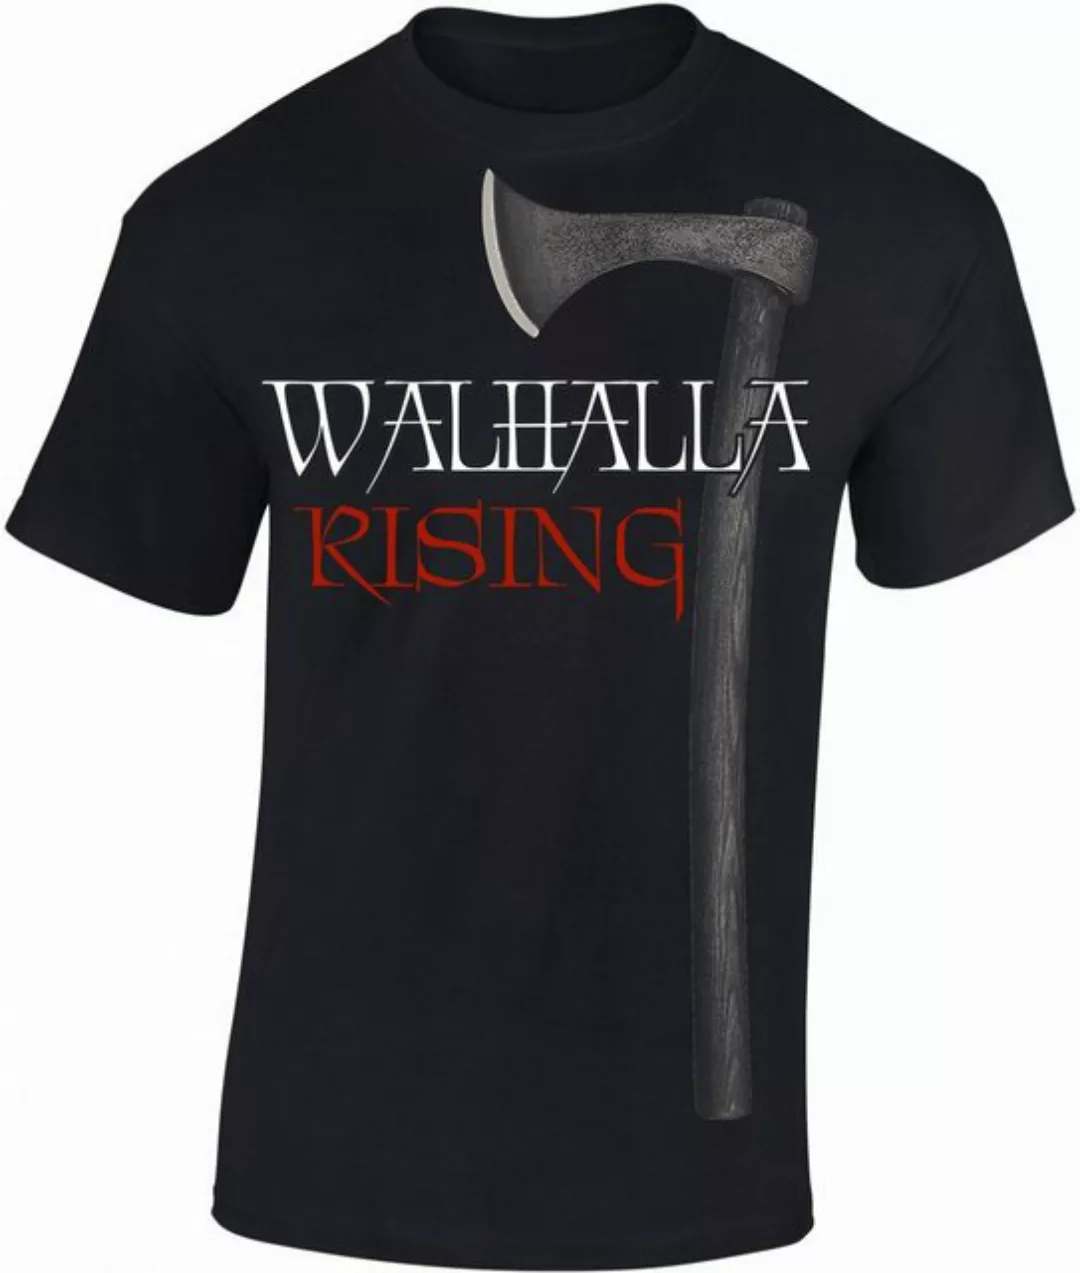 Baddery Print-Shirt Wikinger Tshirt: "Walhalla Rising" - Viking Shirt Männe günstig online kaufen